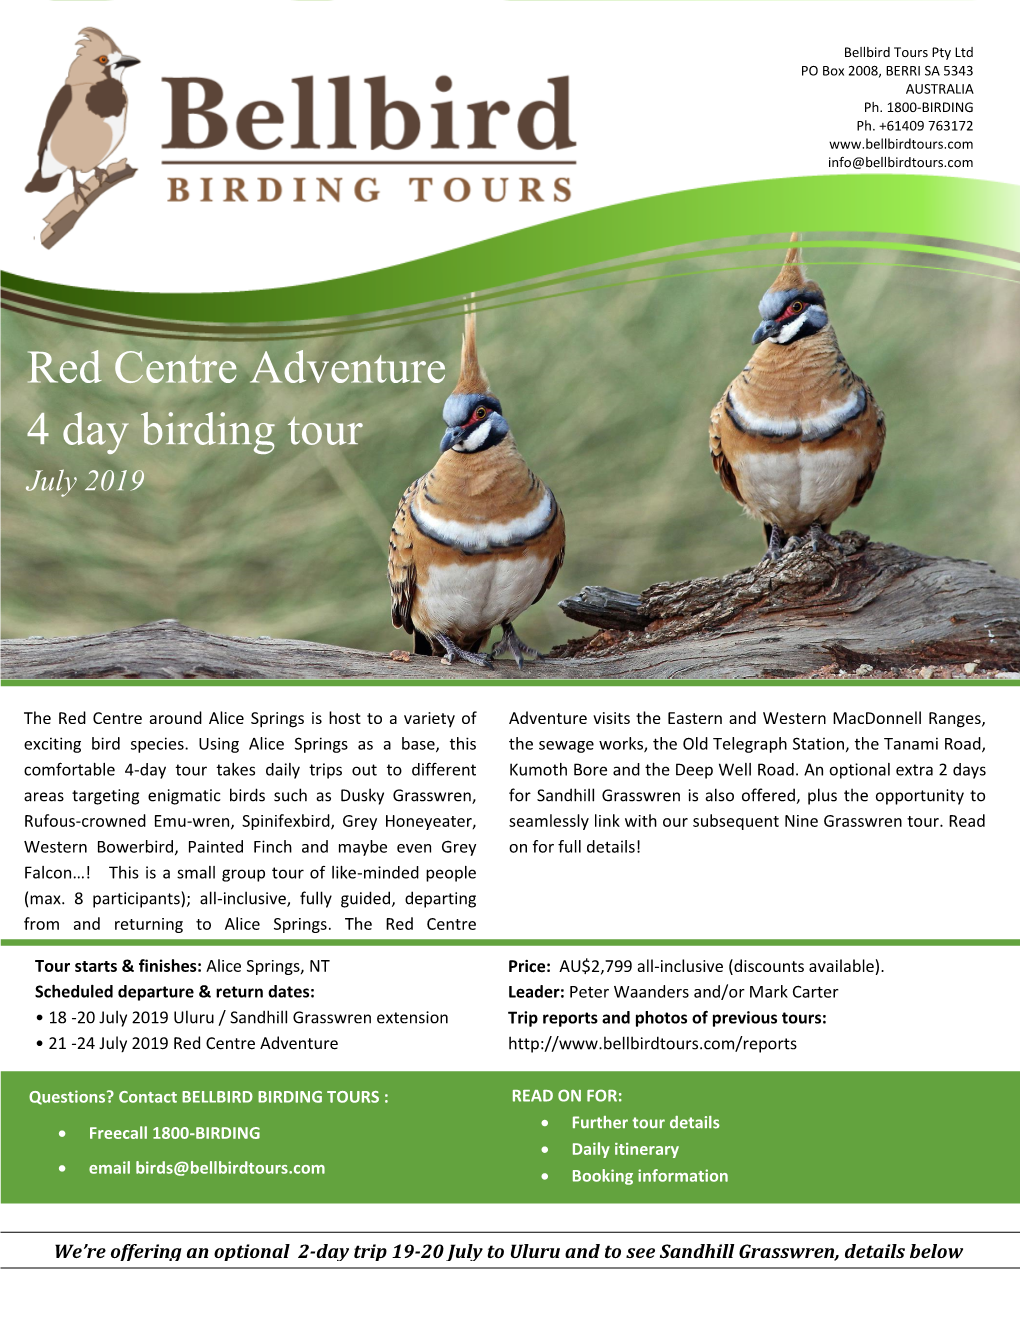 Red Centre Adventure 4 Day Birding Tour July 2019